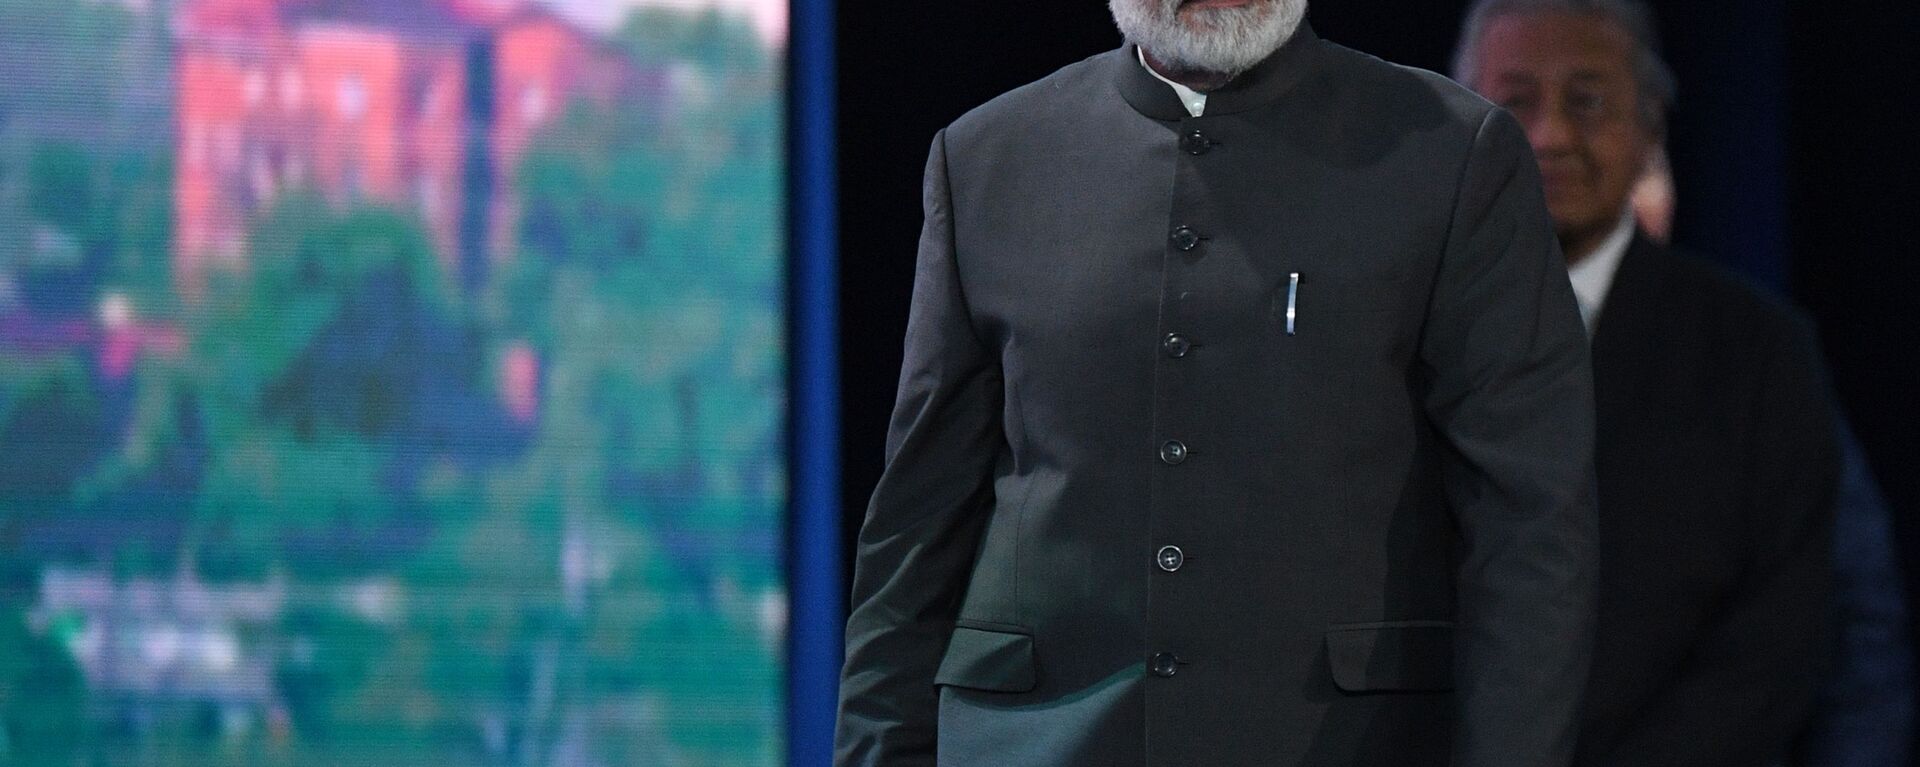 Indian Prime Minister Narendra Modi in Russia - Sputnik International, 1920, 09.05.2020